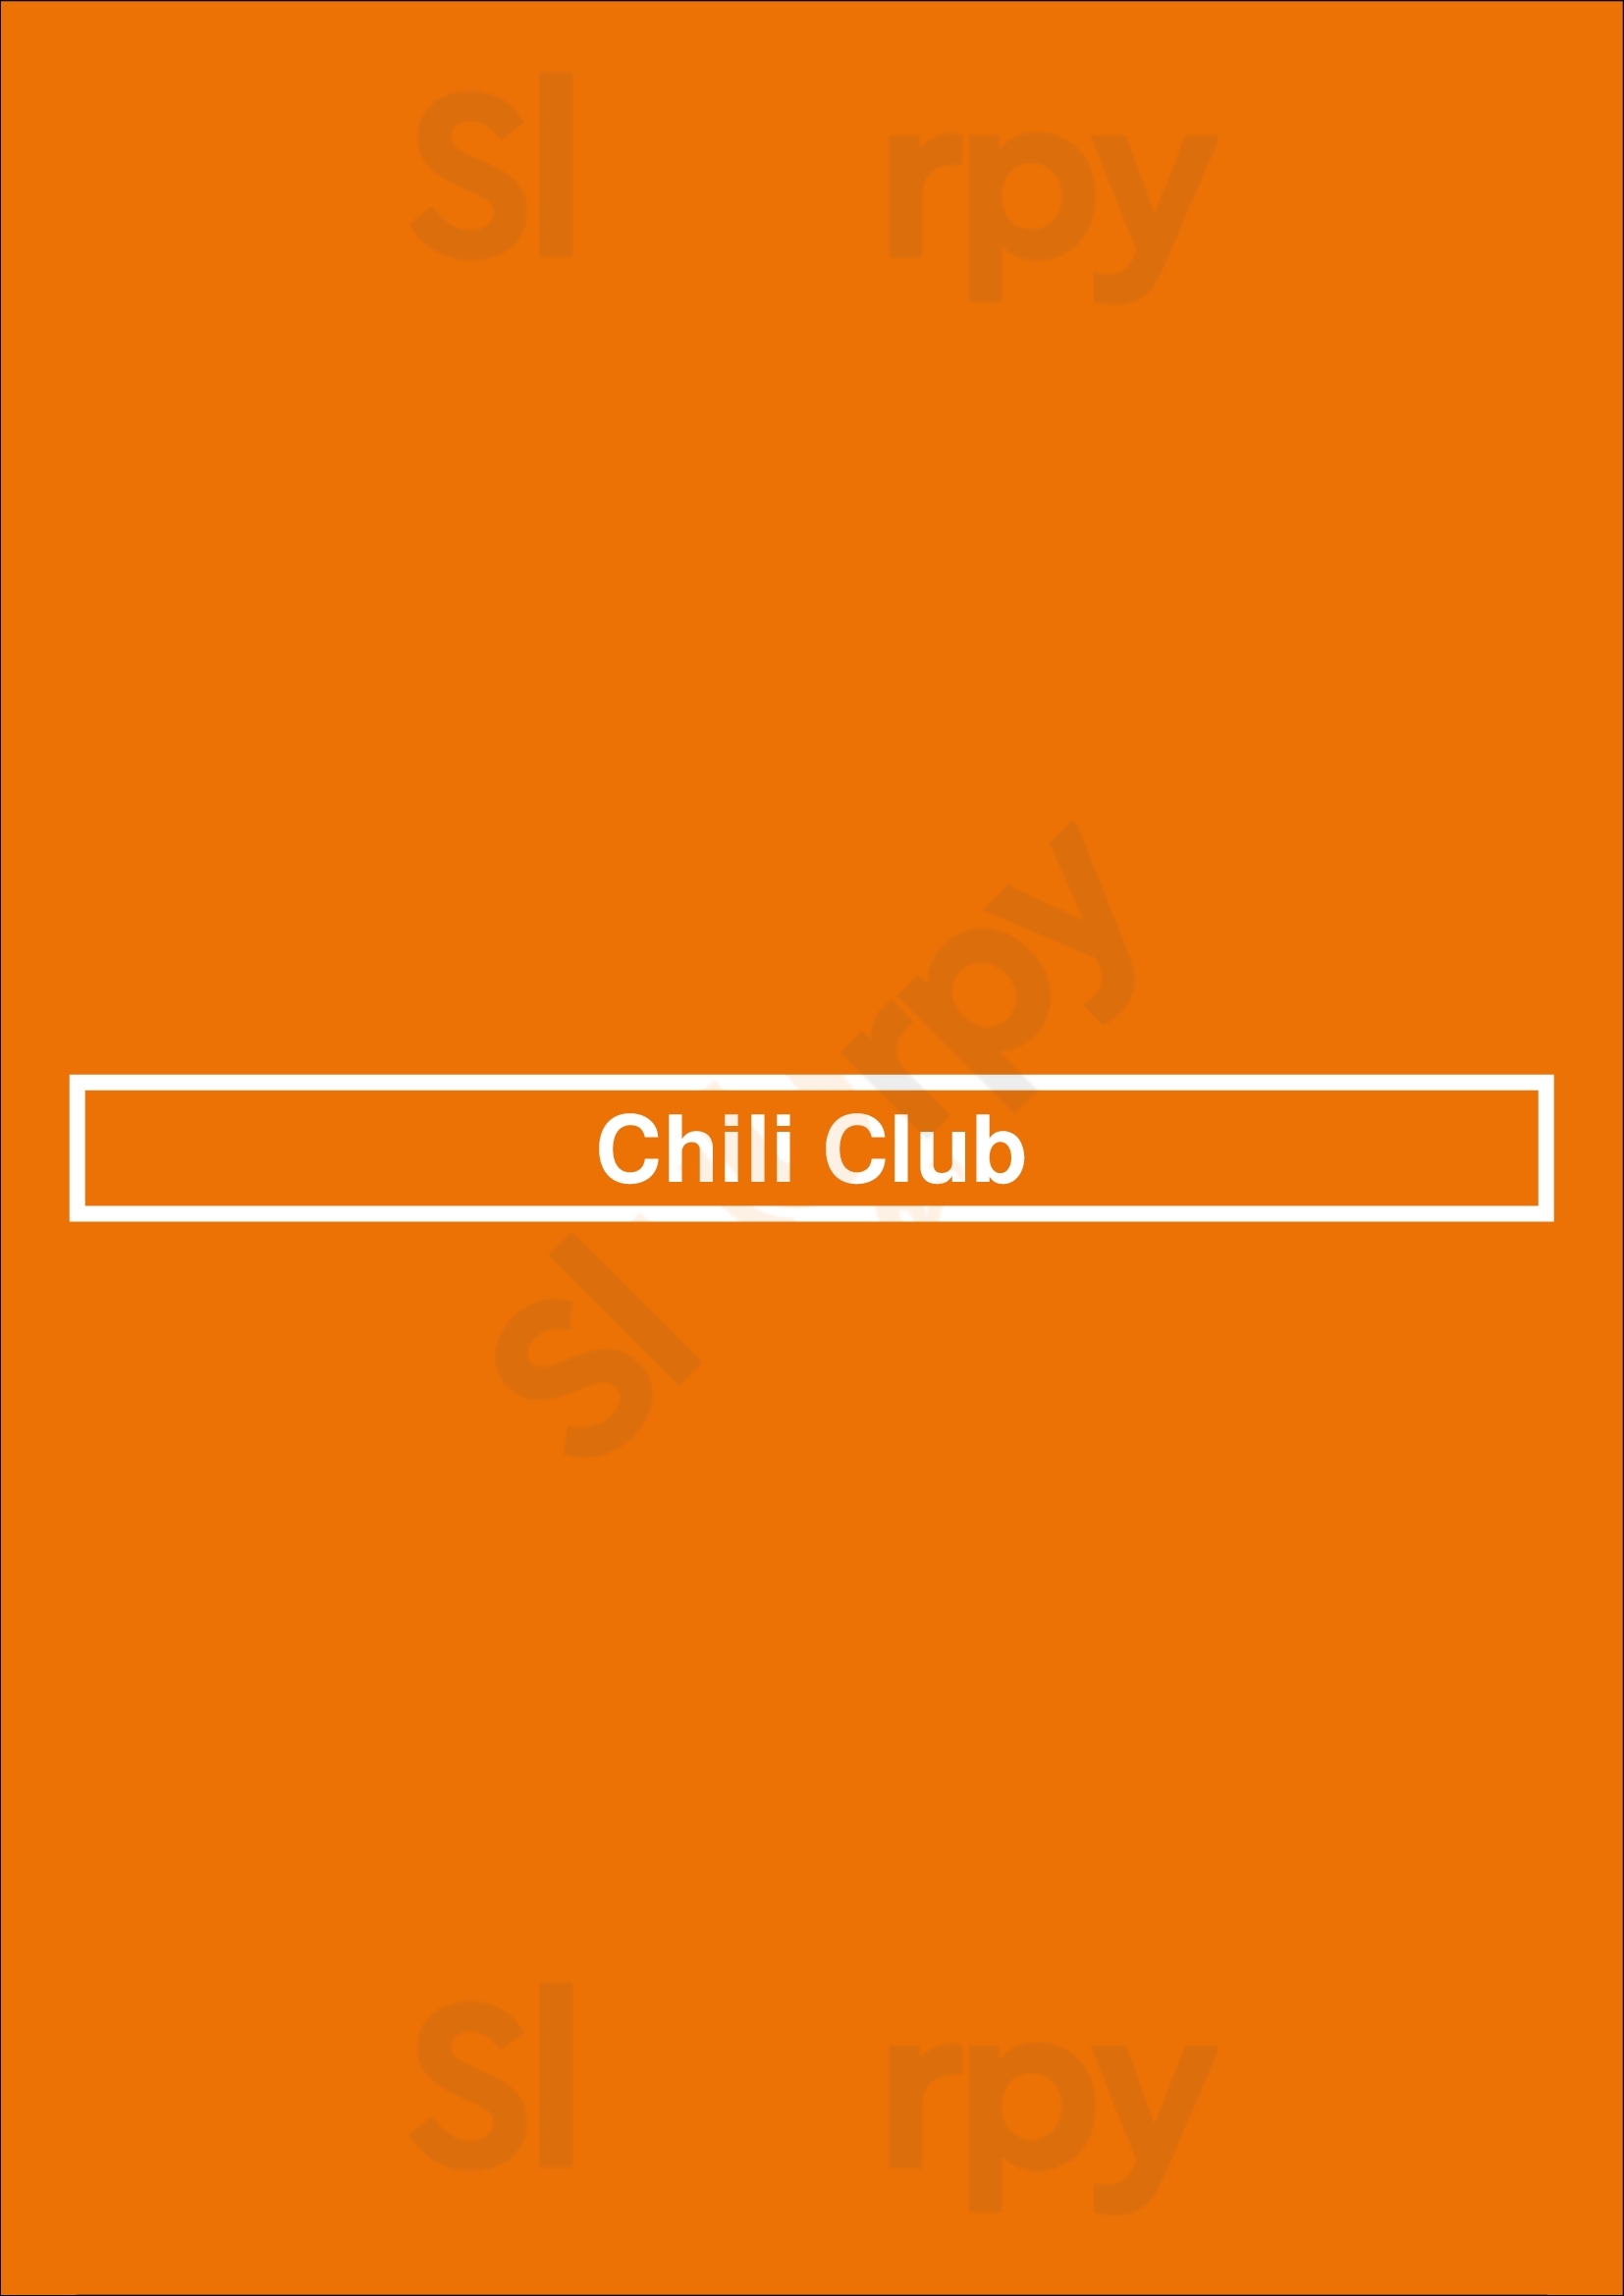 Chili Club Dublin Menu - 1